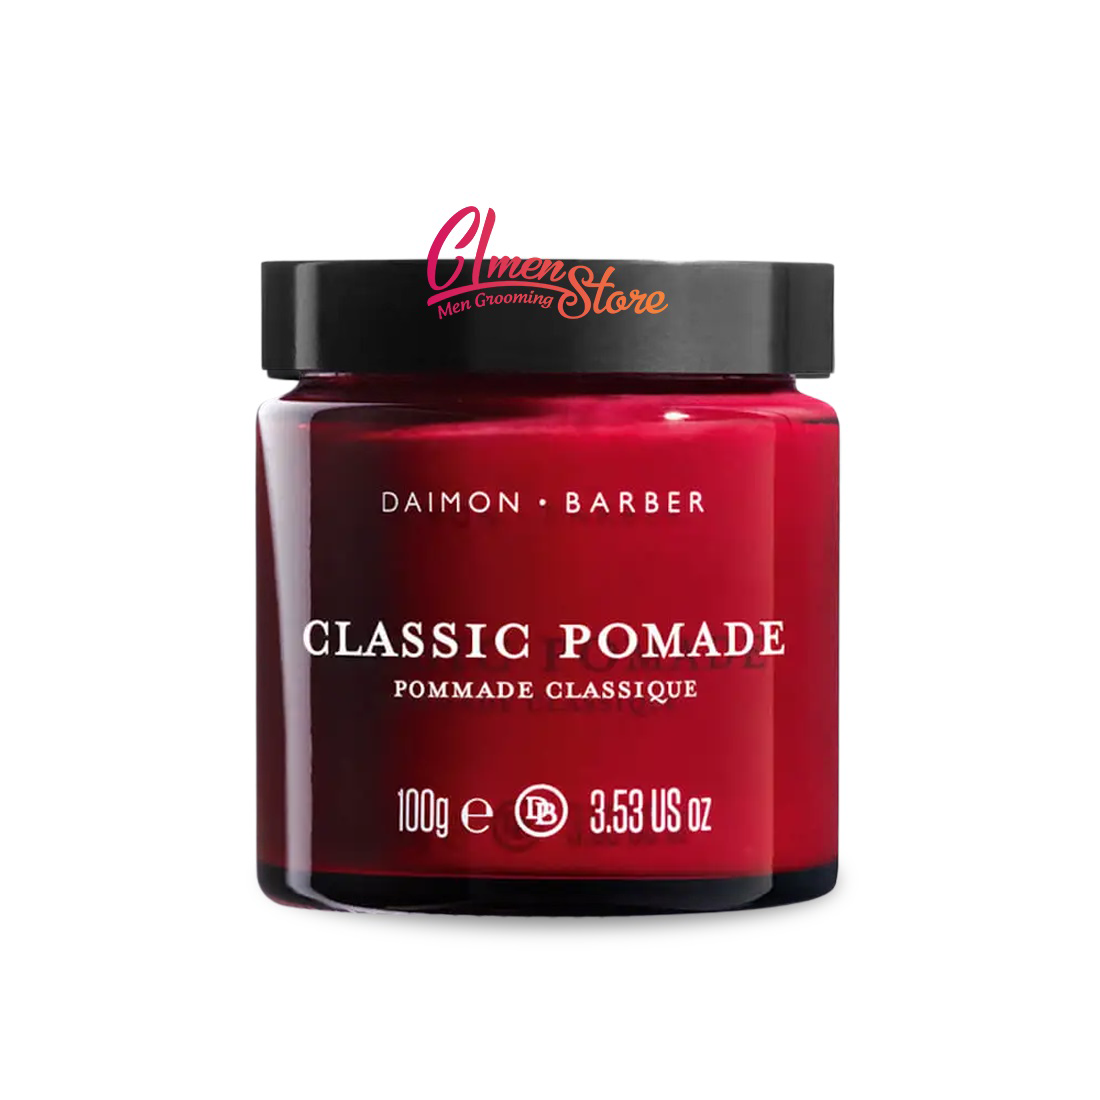 Daimon Barber Classic Pomade